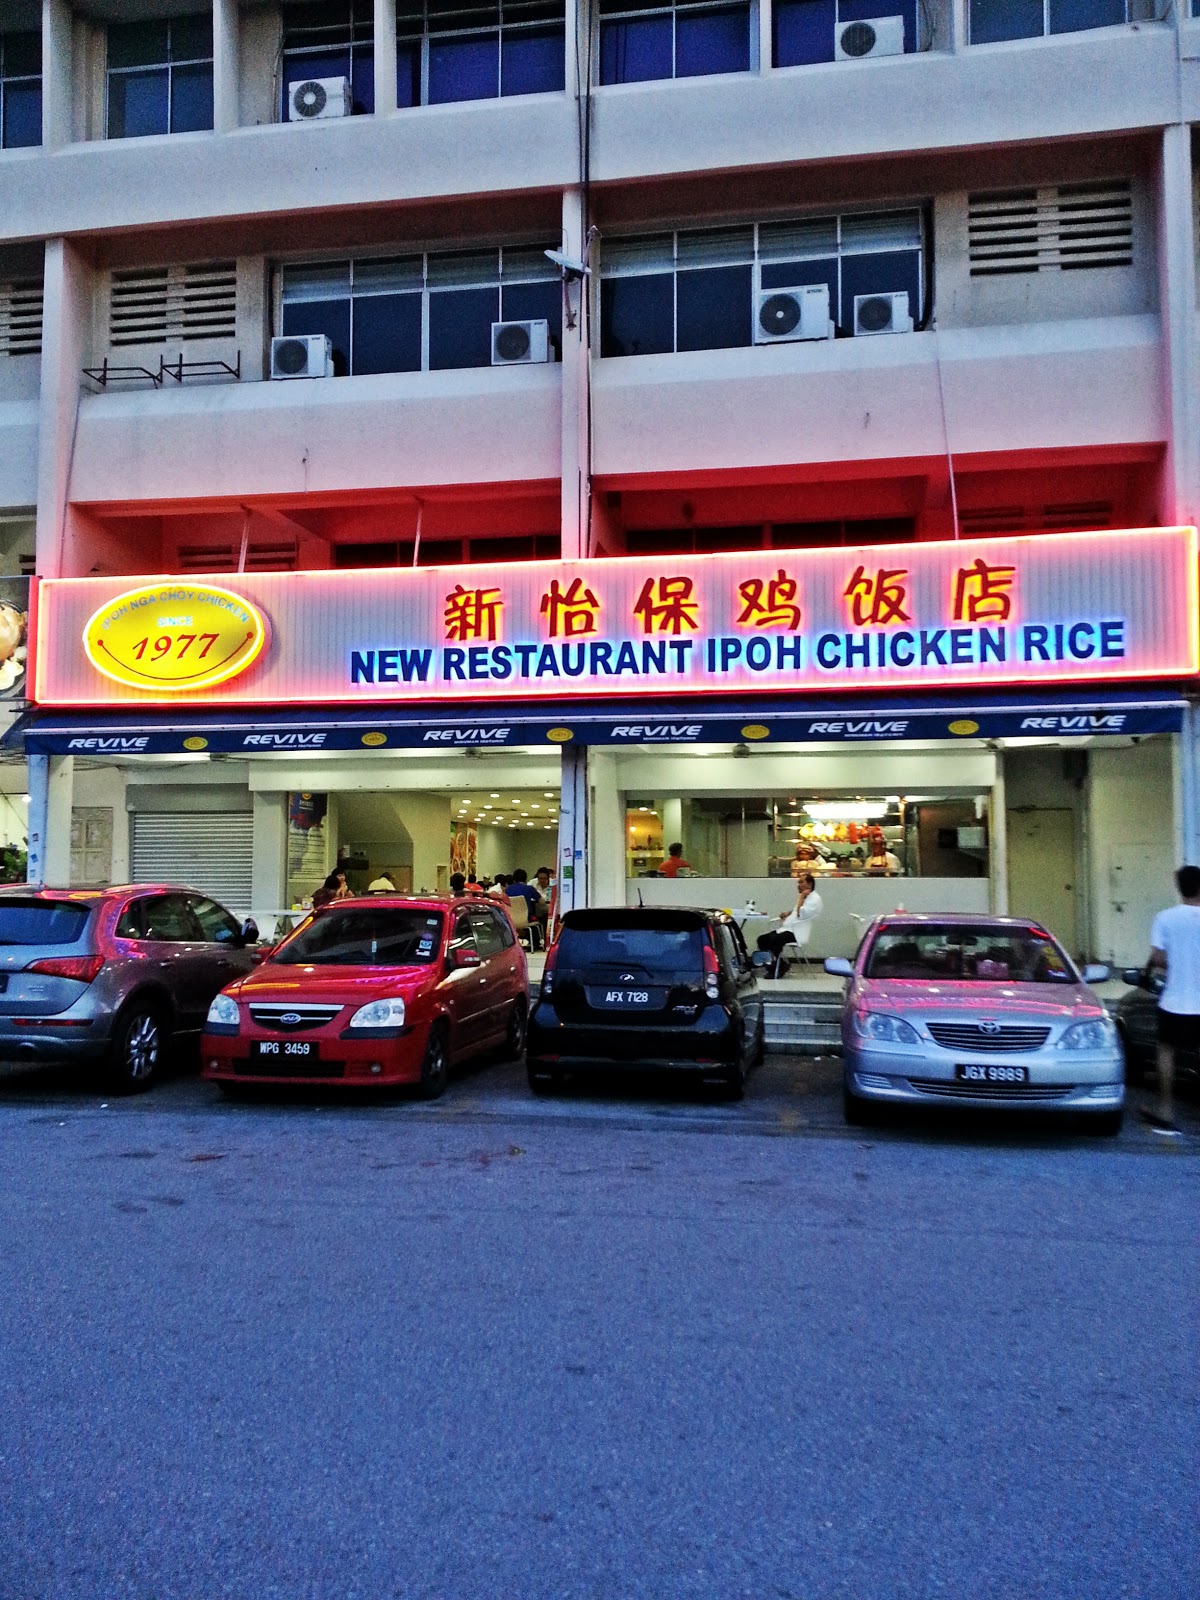 Venoth's Culinary Adventures: New Restaurant Ipoh Chicken Rice